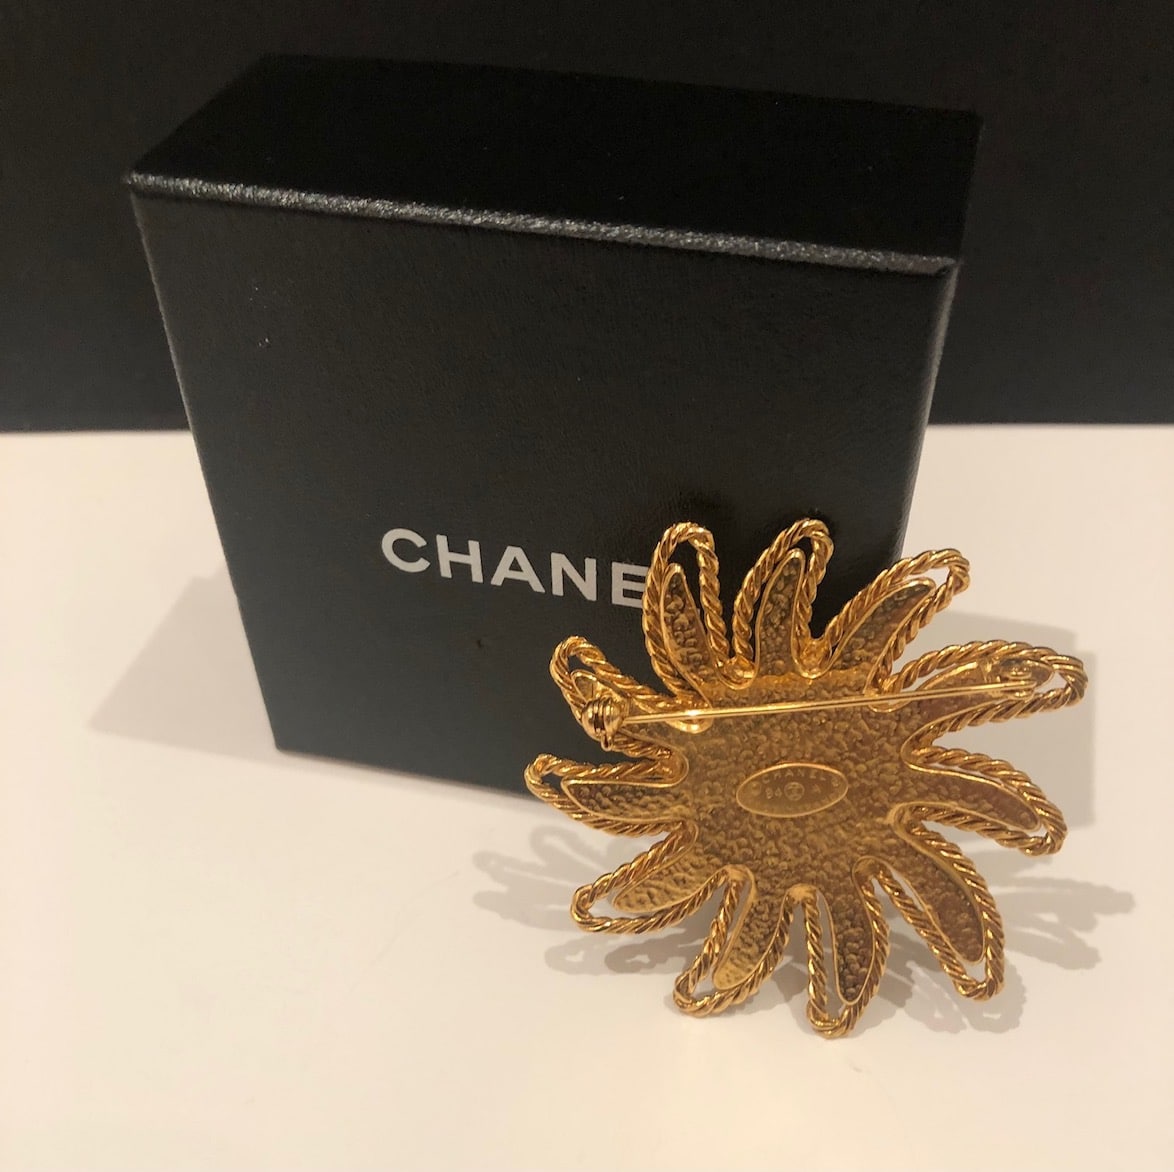 CHANEL, Jewelry, Chanel Handbag Brooch Nwt